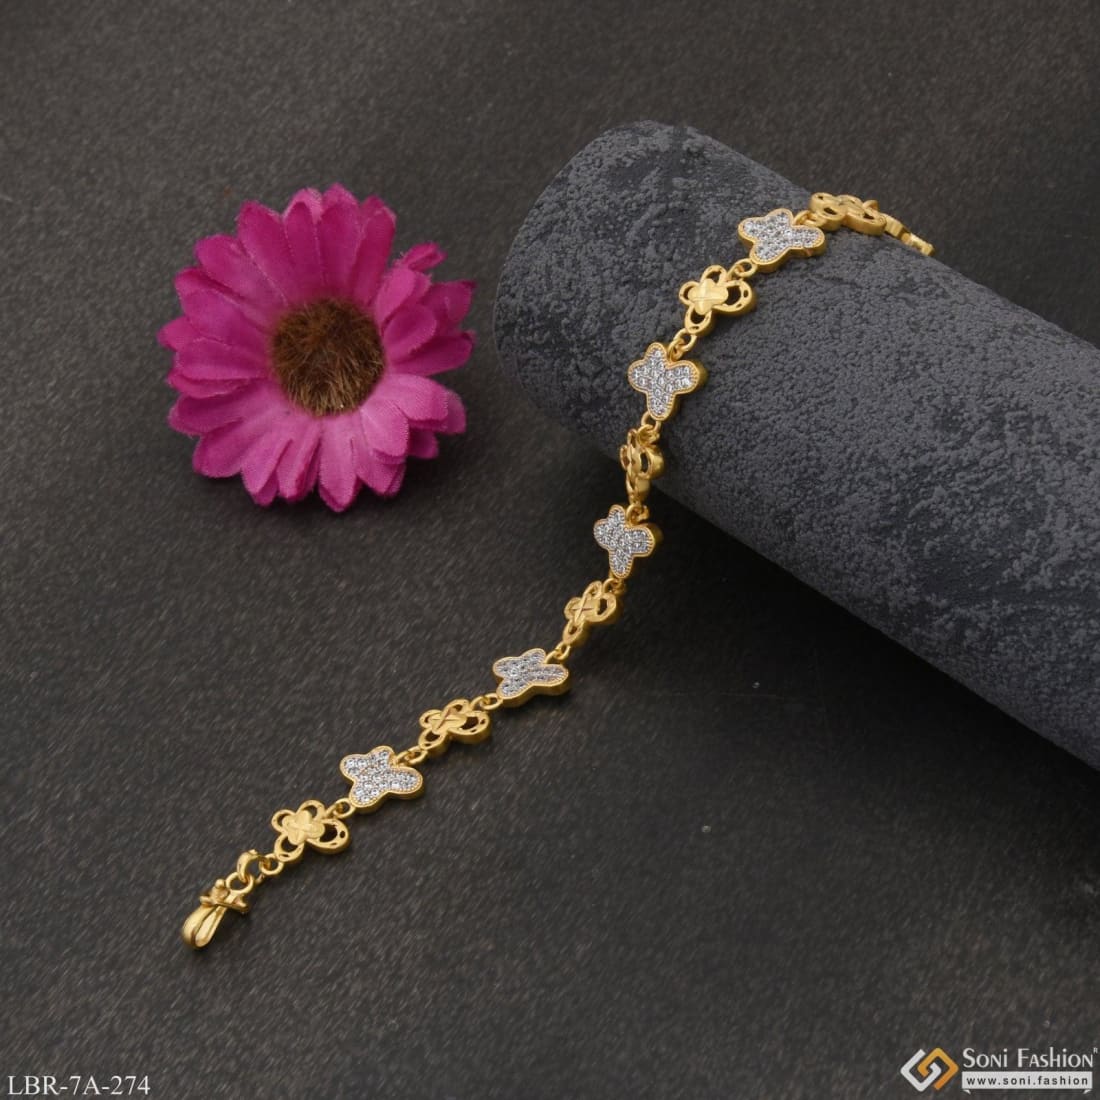 Elegant Floral Gold Bracelet Design Ideas CZ Stones Jewellery Online B24921